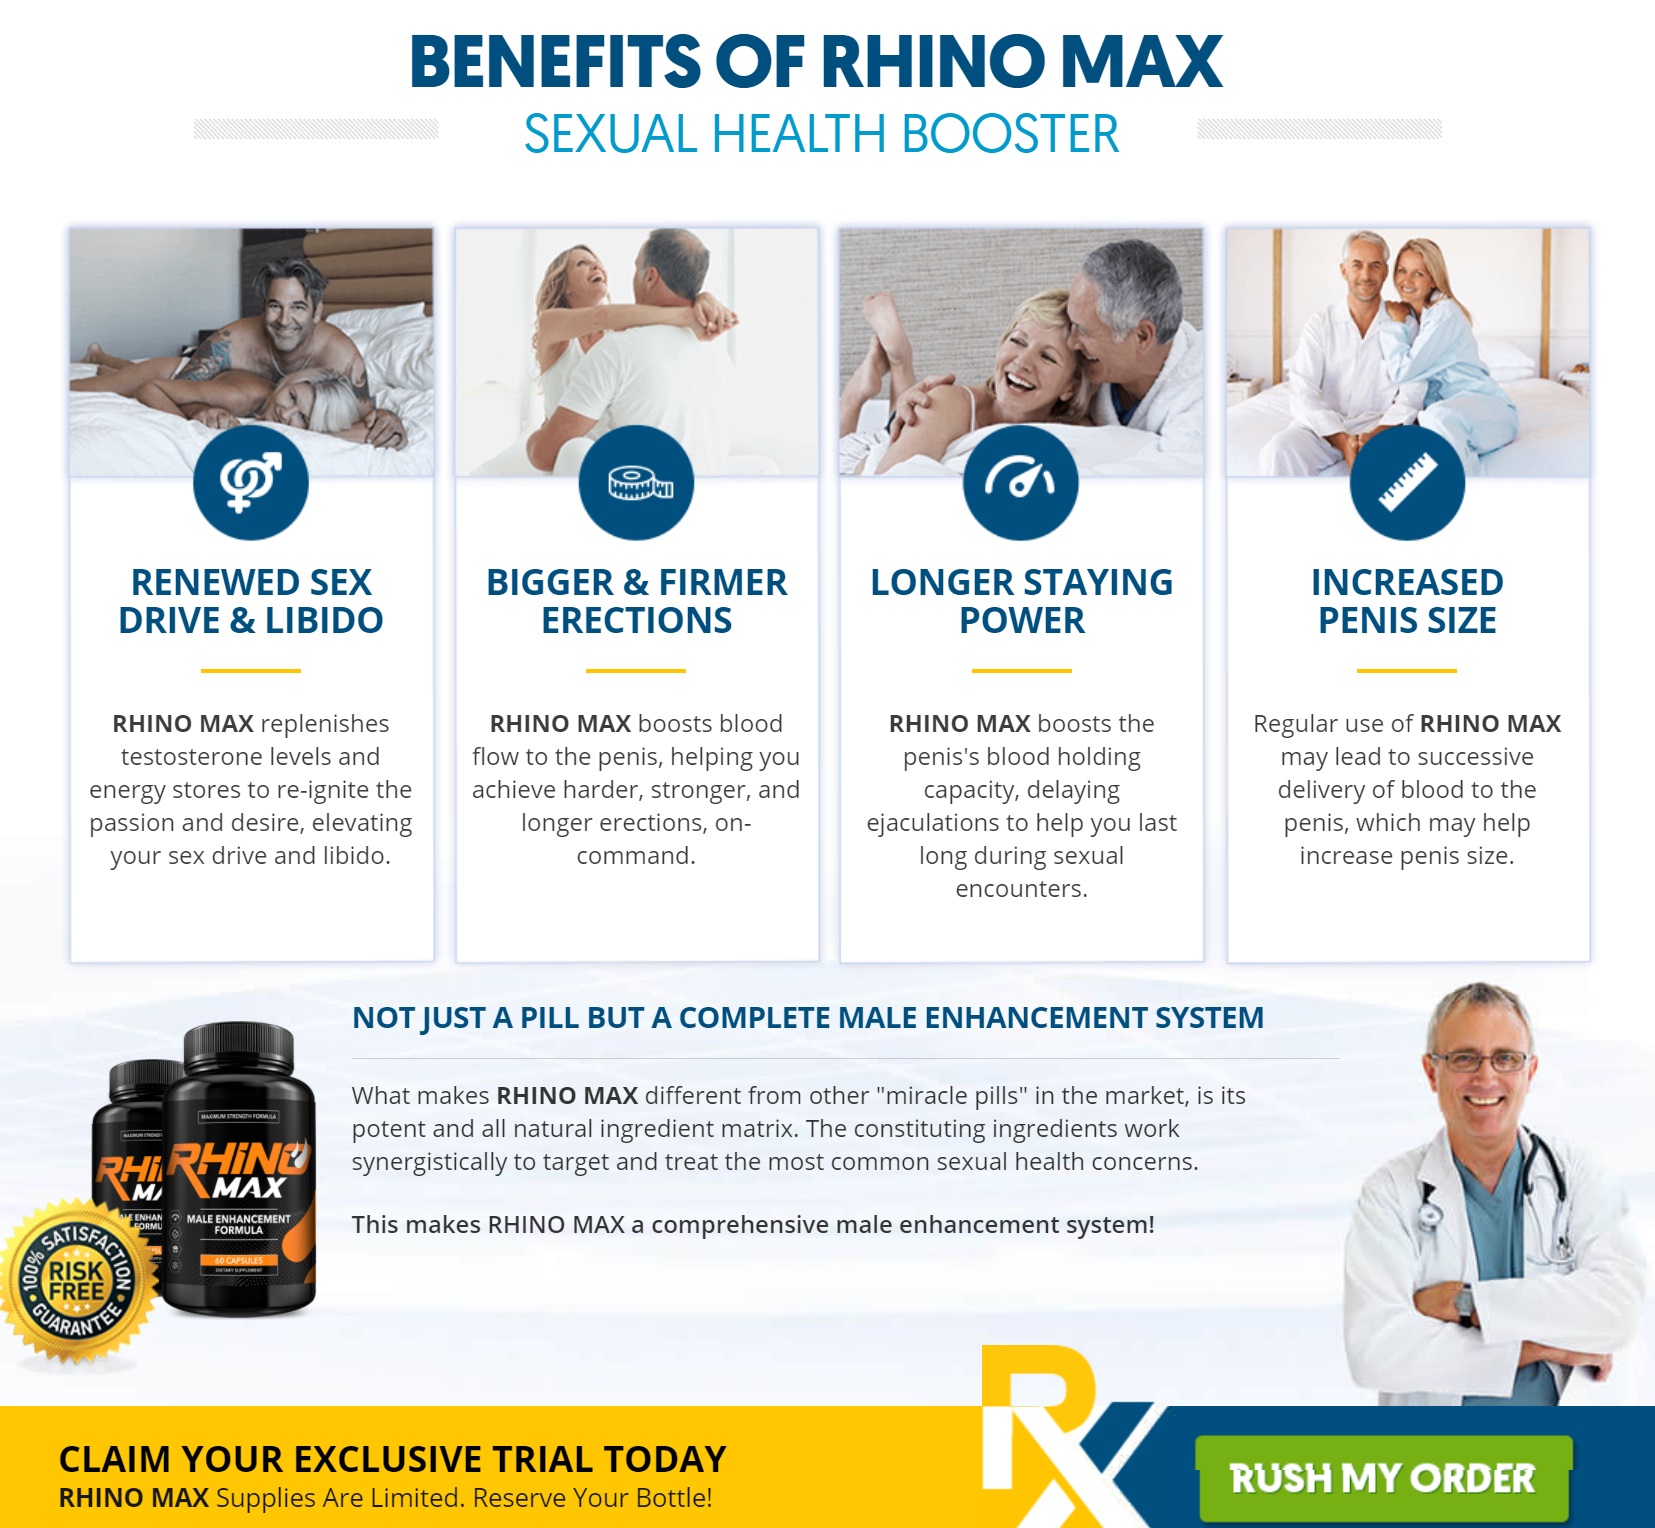 RhinoMax Male Enhancement Benefits